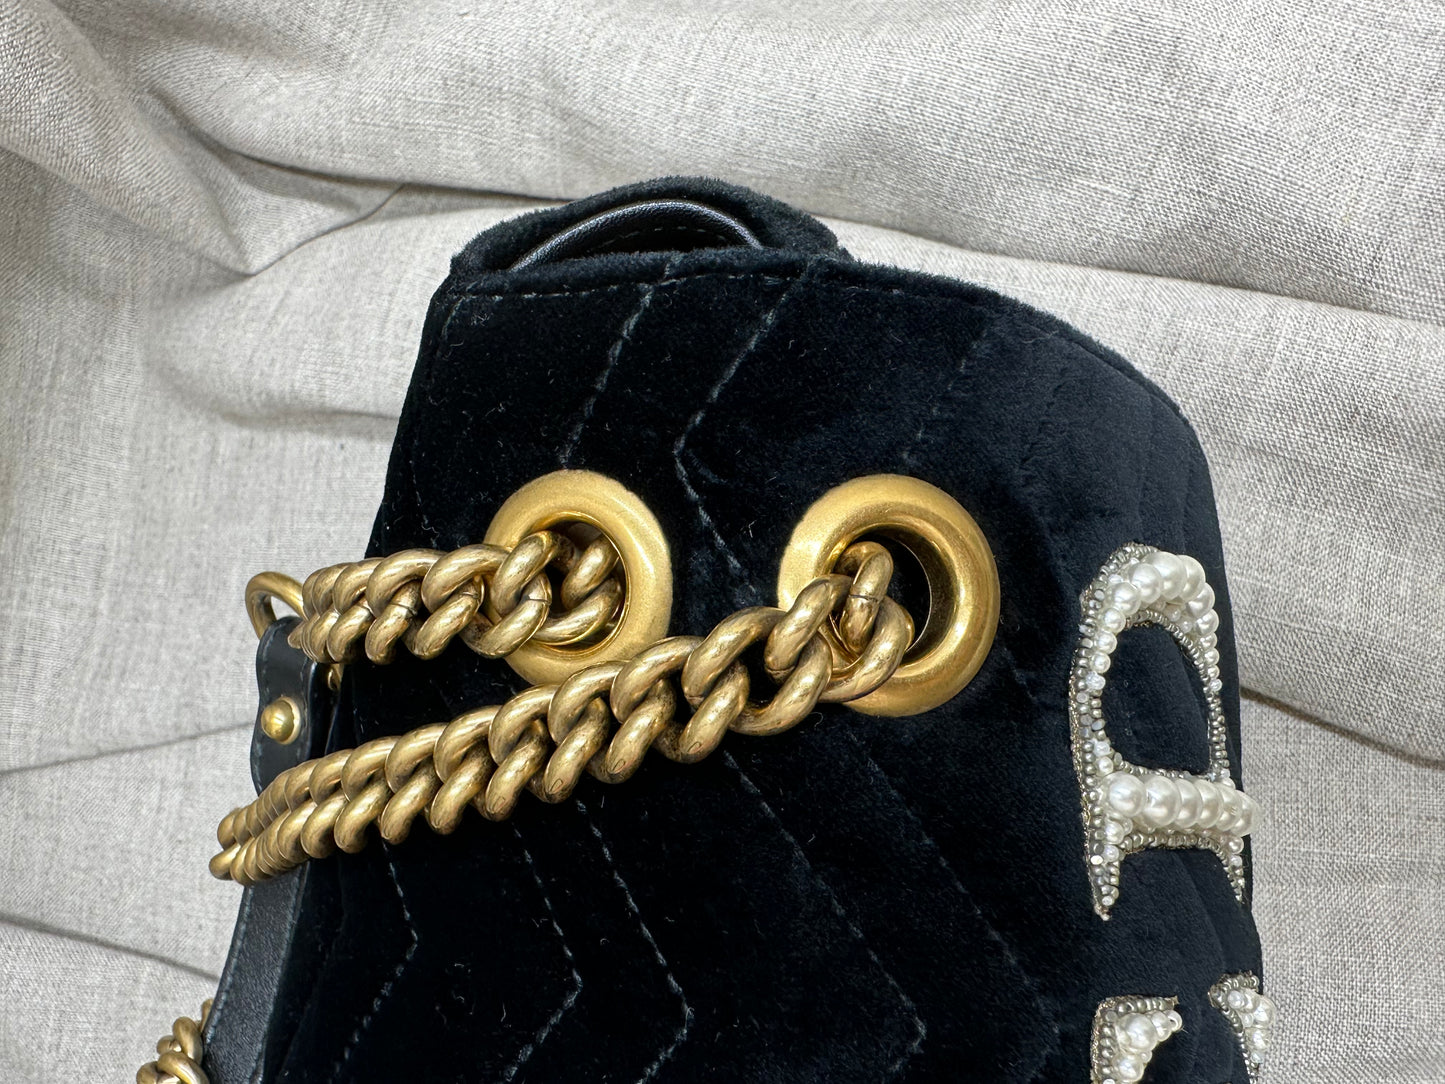 Gucci GG Marmont "Love" Flap Bag